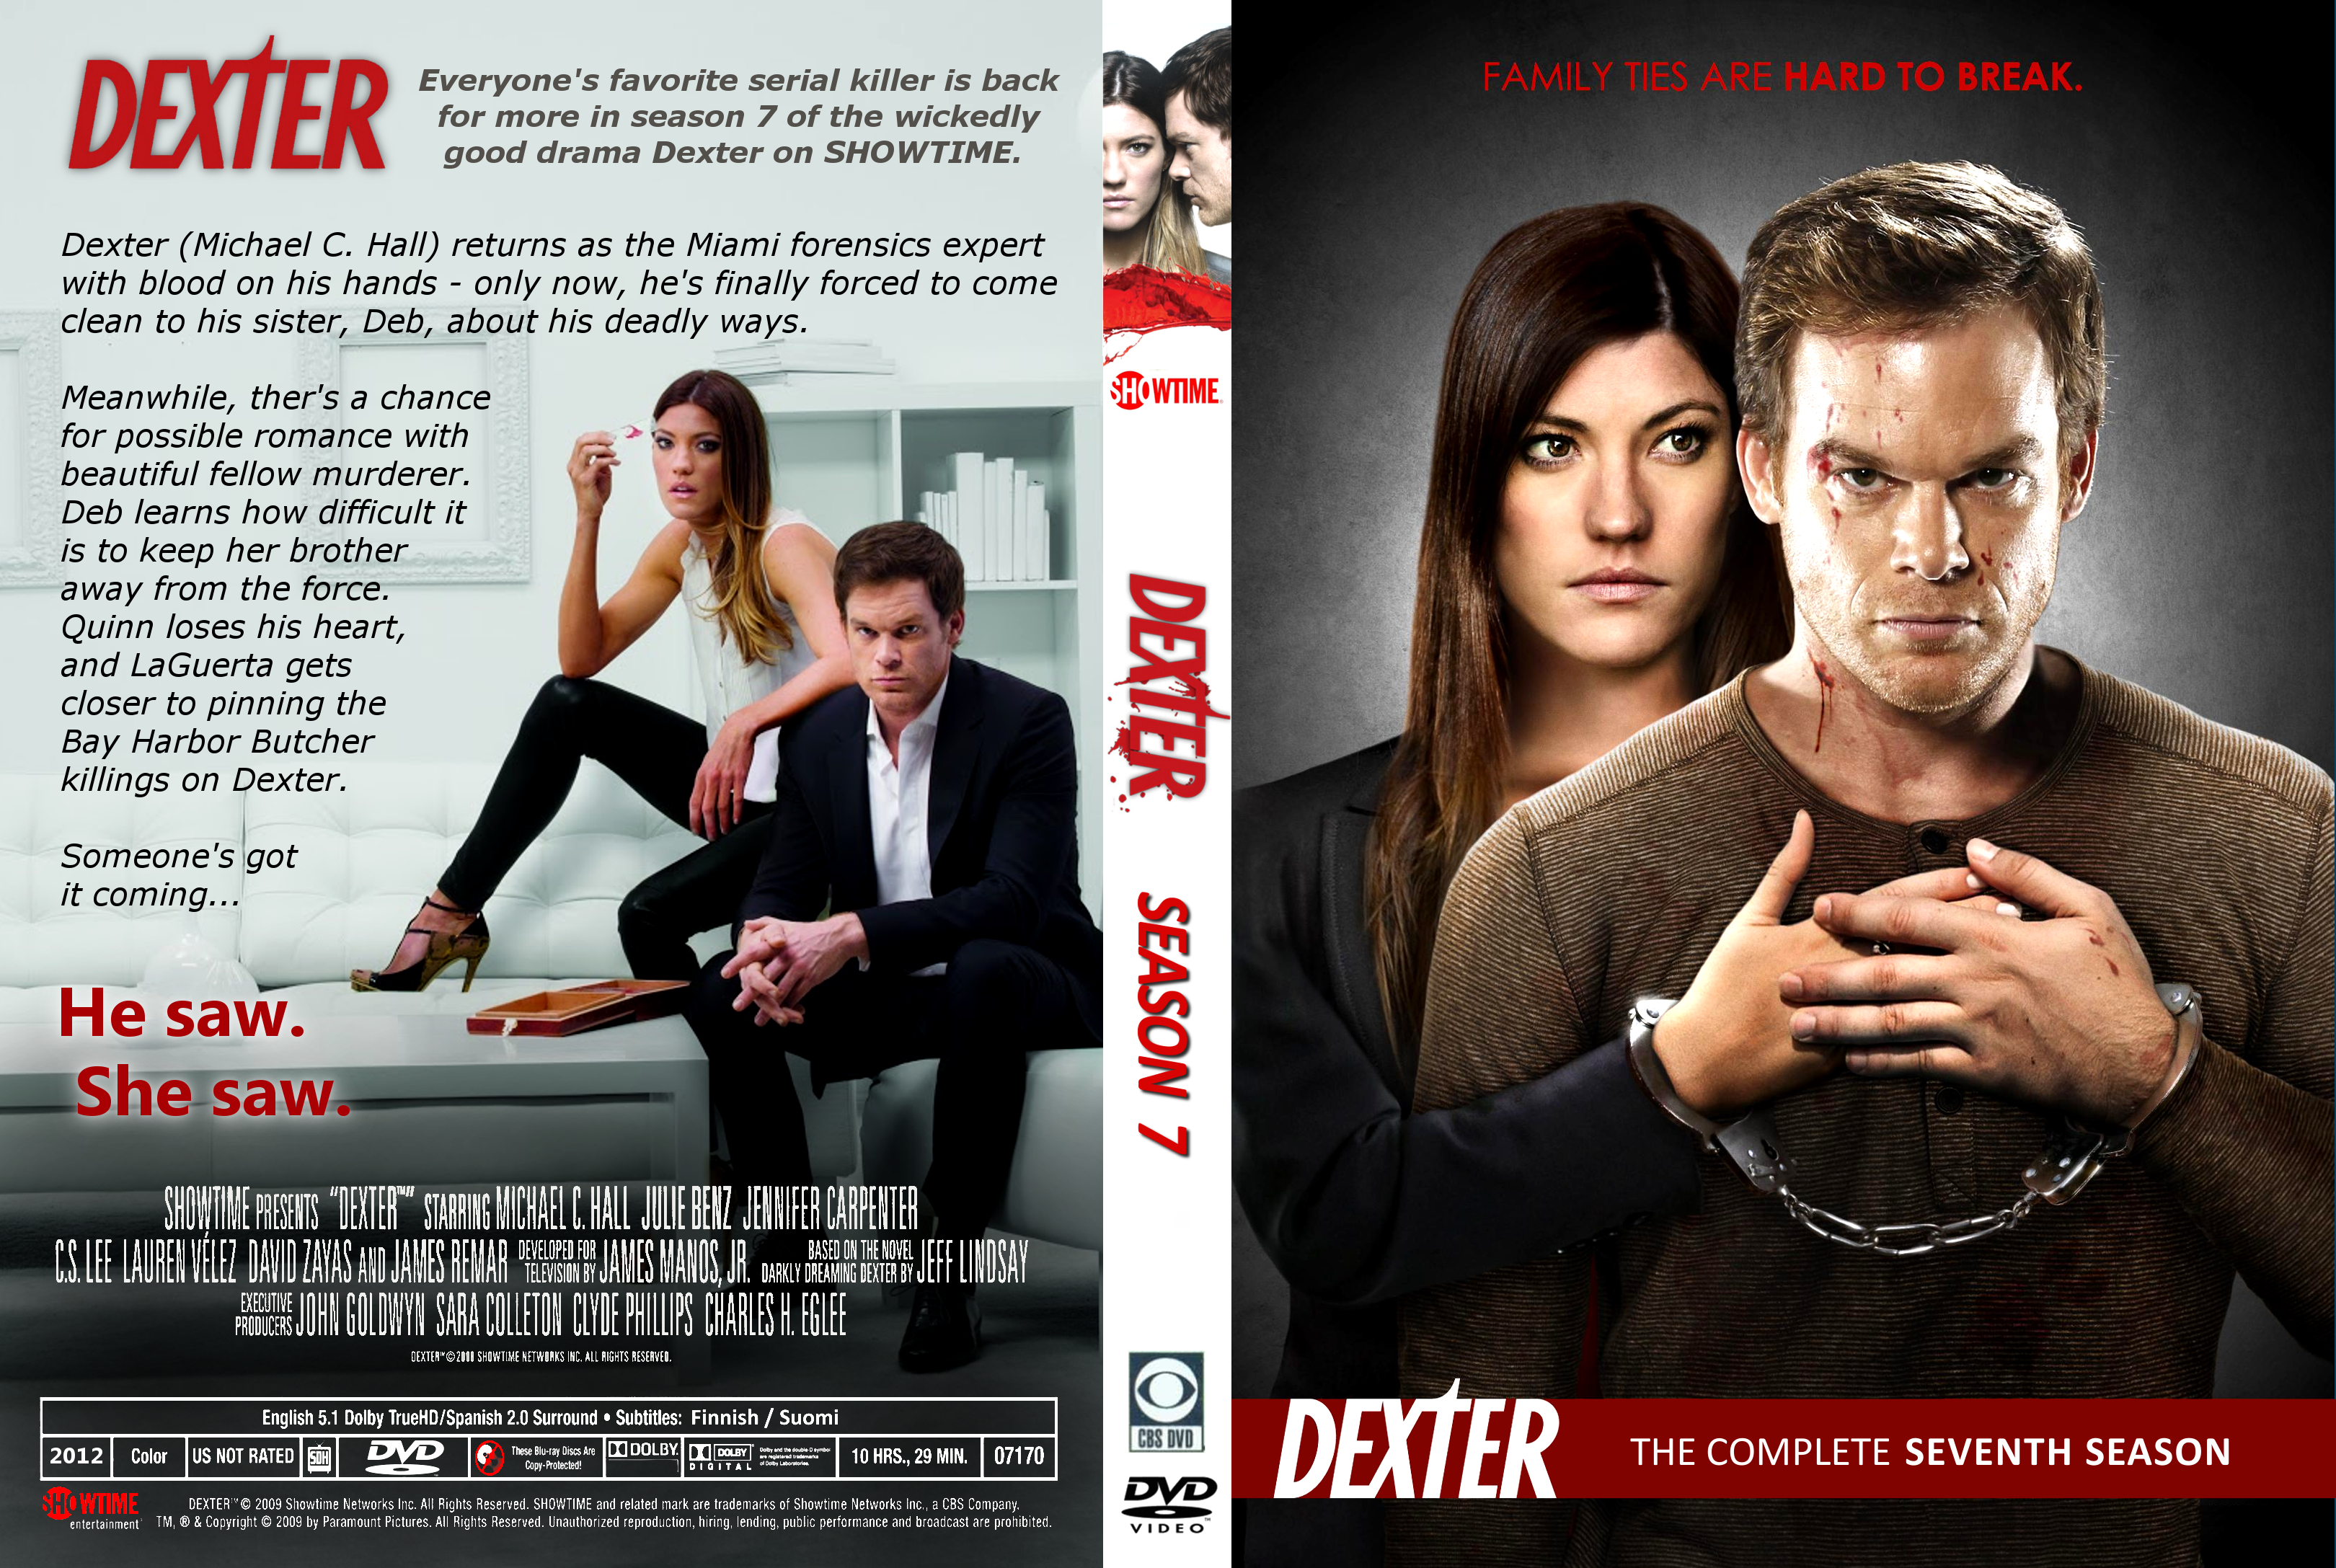 dexter final season dvd cover